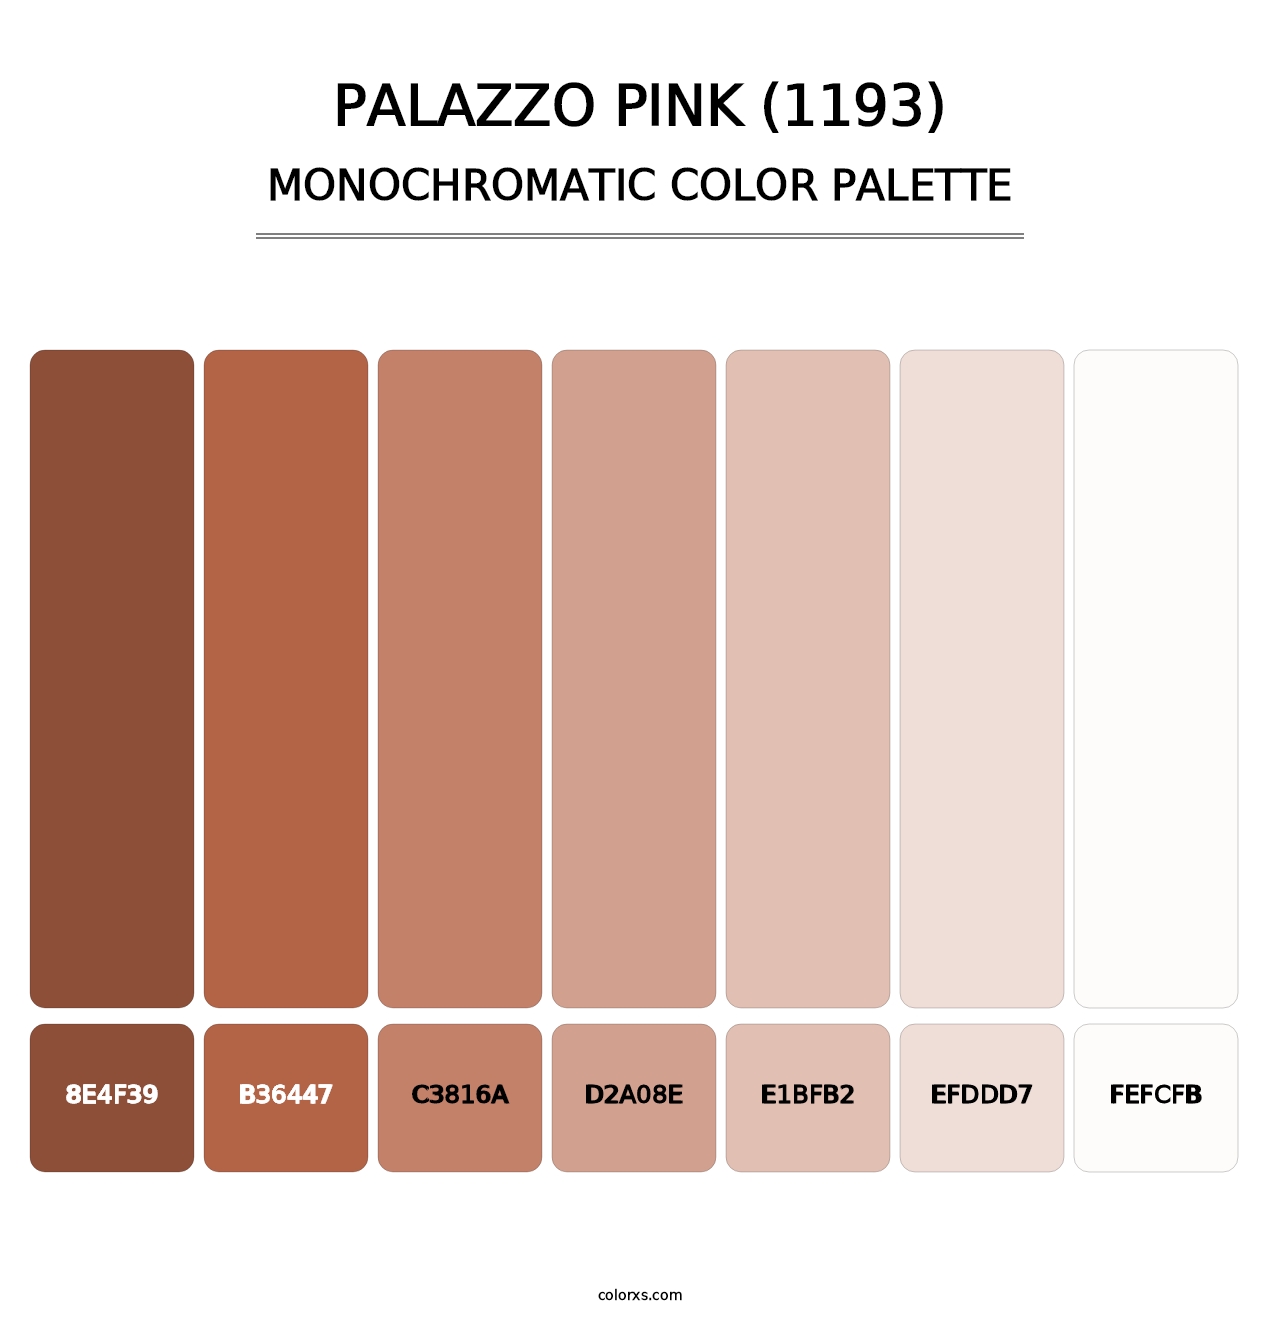 Palazzo Pink (1193) - Monochromatic Color Palette